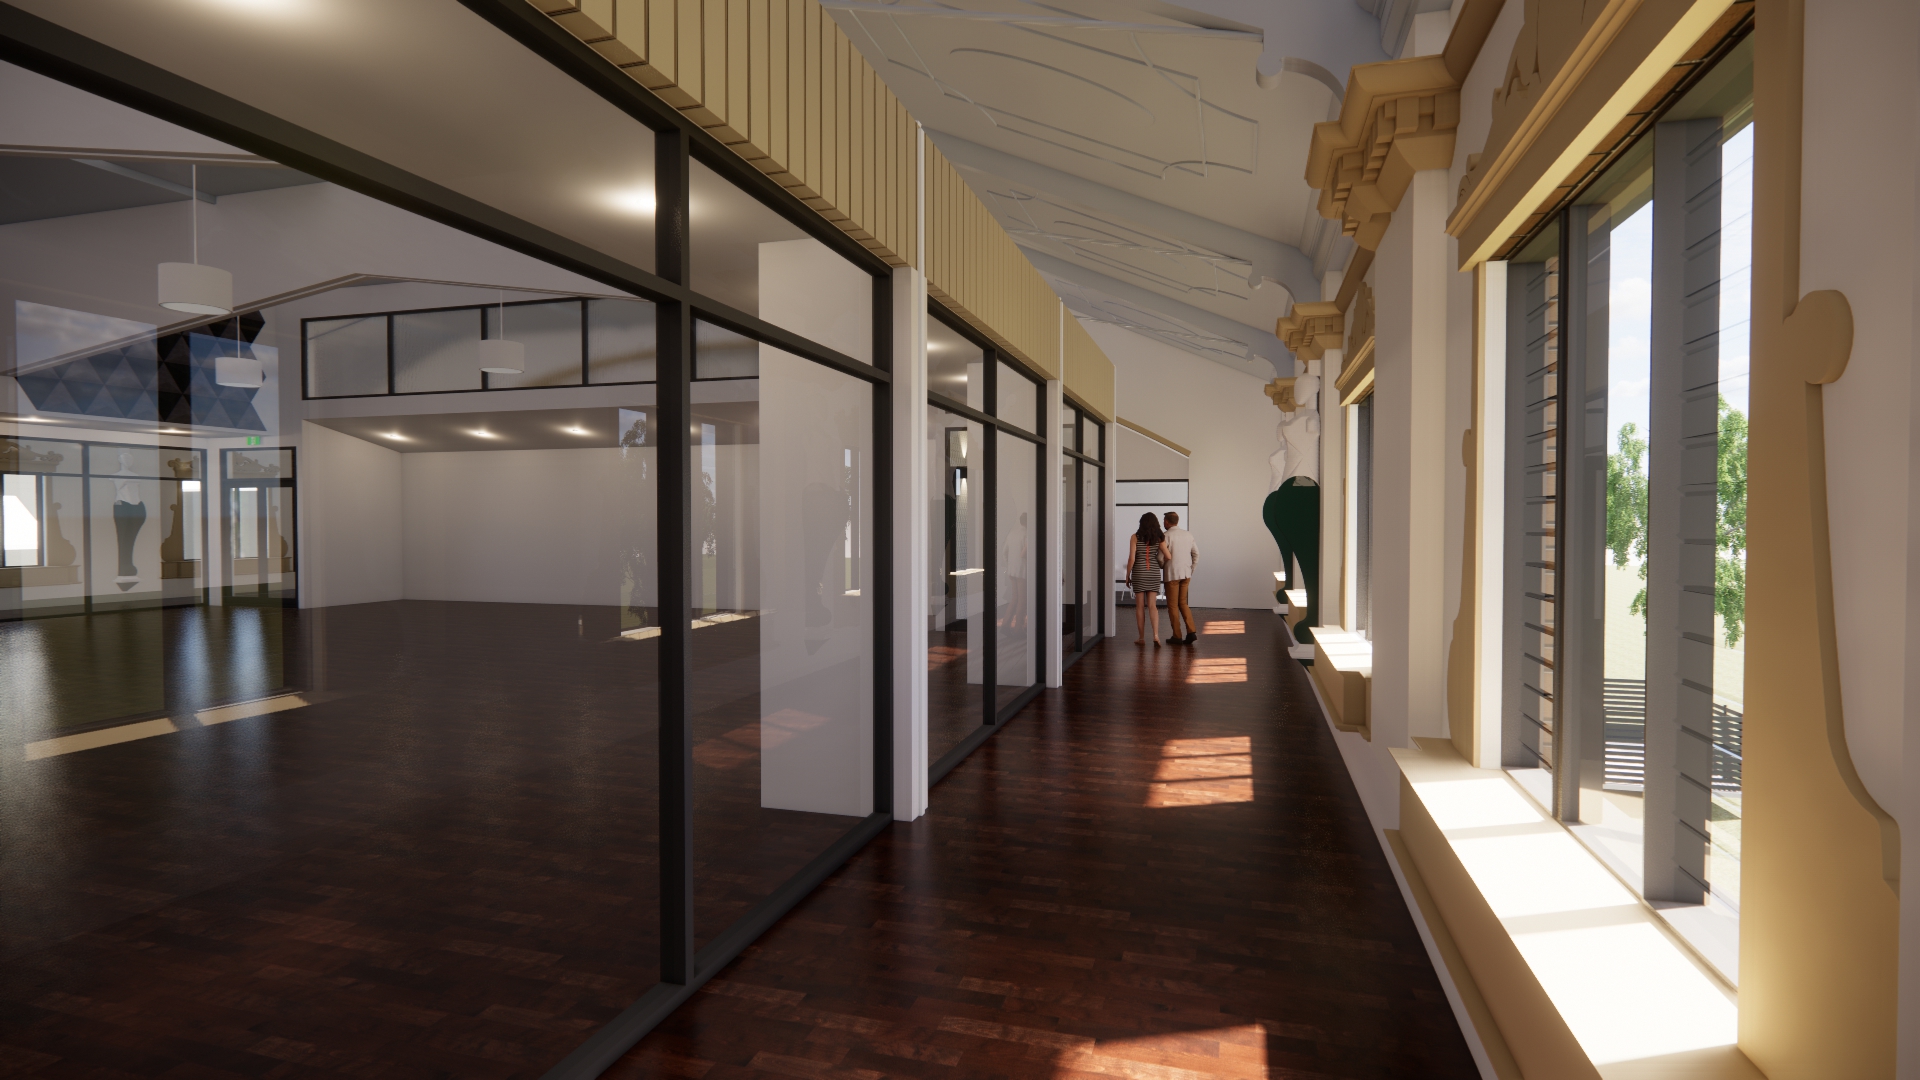 ARTIST IMPRESSION: Concept plans show an open floor community space in the redeveloped Wintergarden Theatre's upper floor.